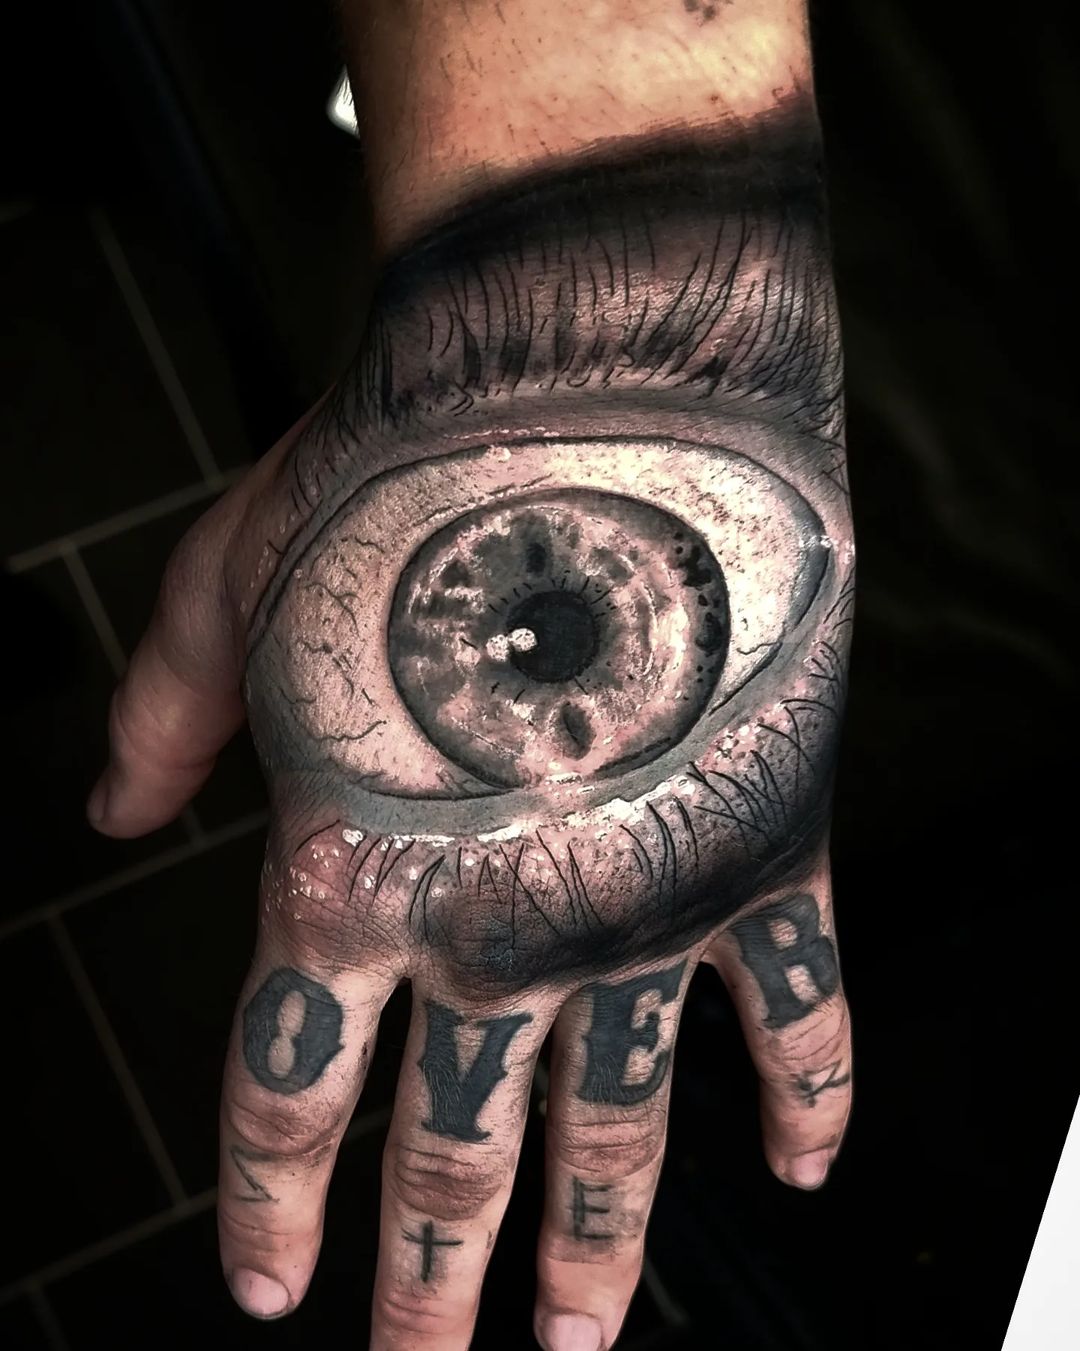 Big Over Eye Hand Tattoo Design